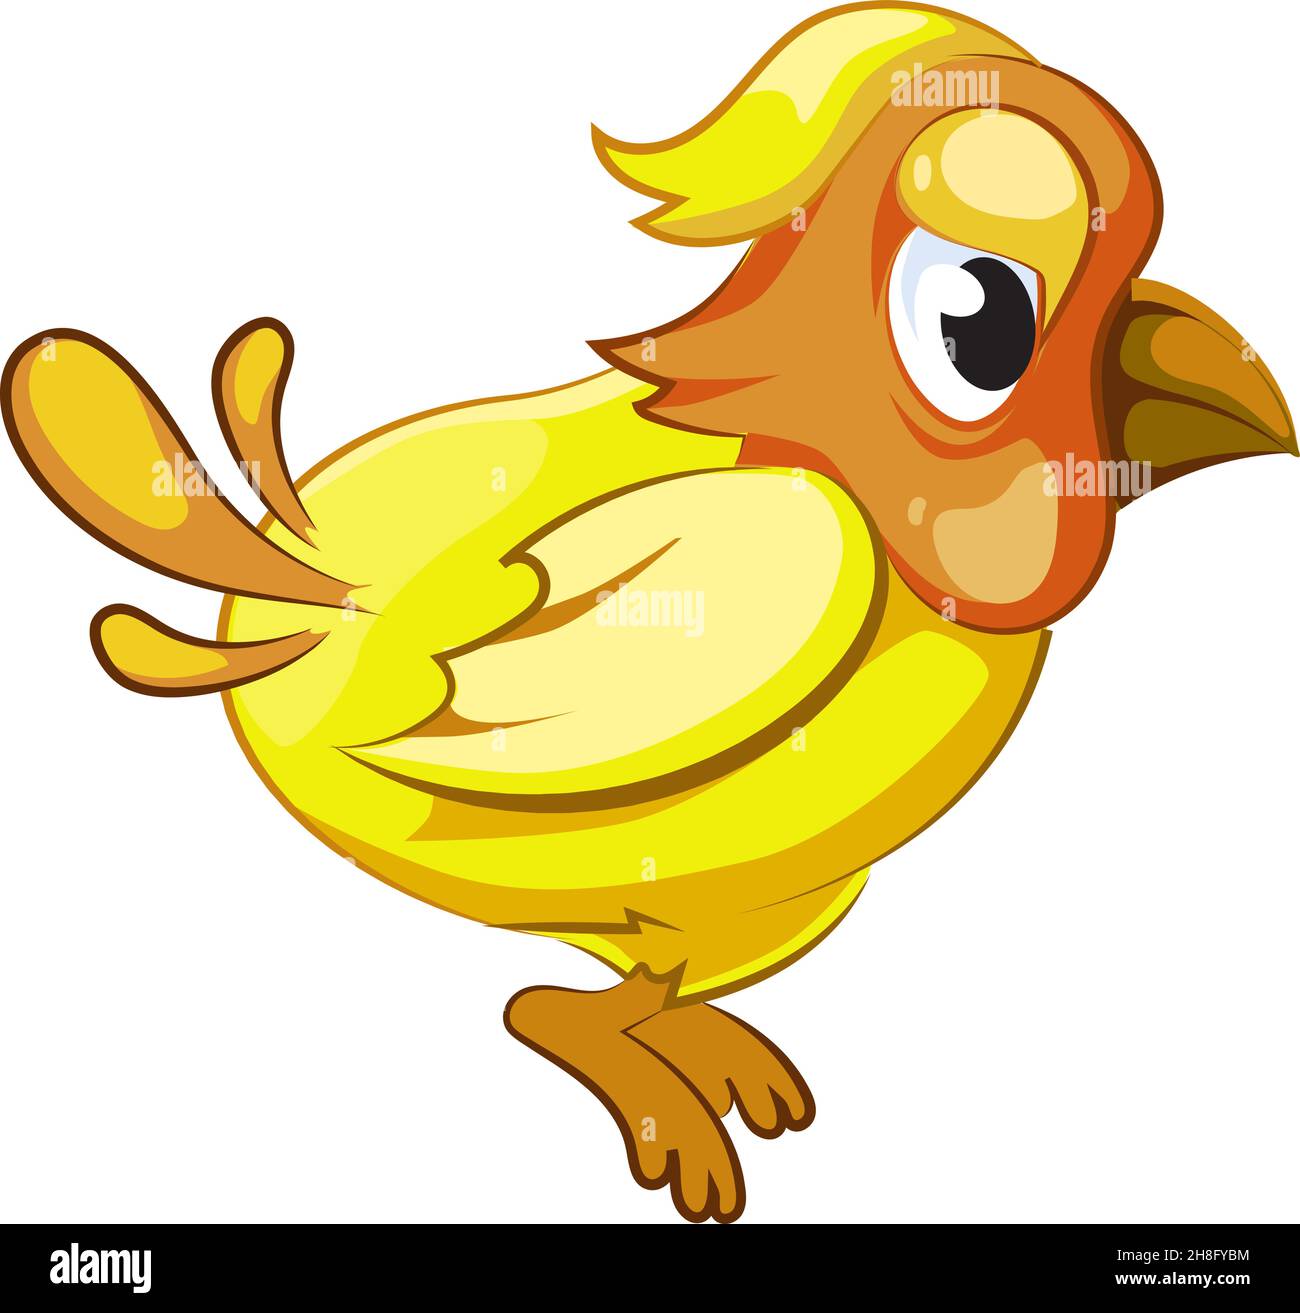 Funny yellow feather bird. Cute cartoon character Stock Vector Image ...